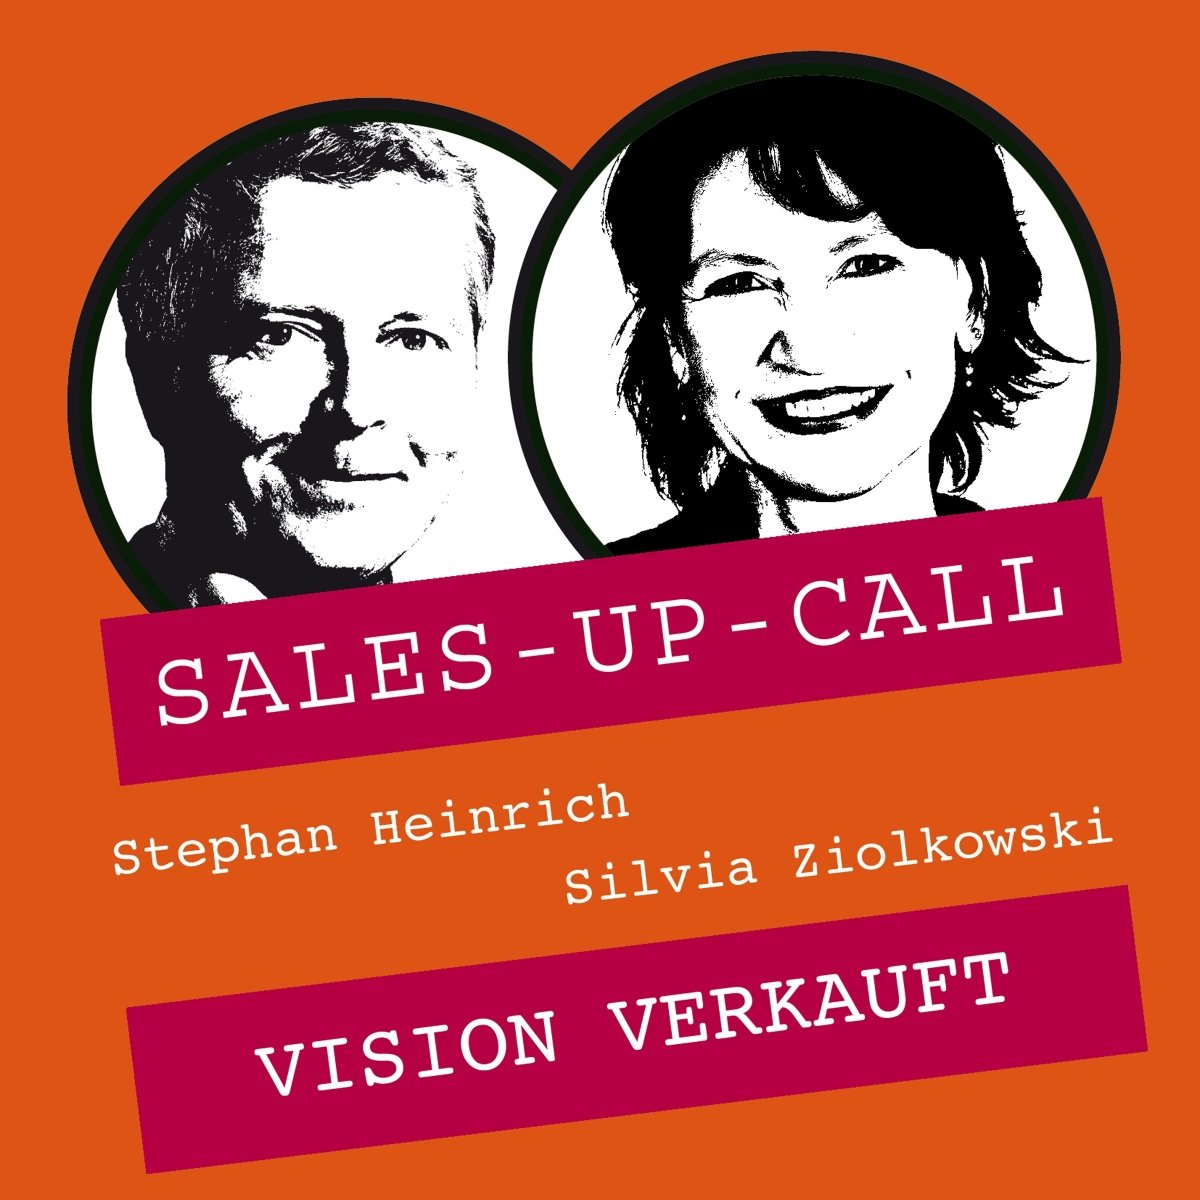 Vision verkauft - Sales-up-Call - Stephan Heinrich